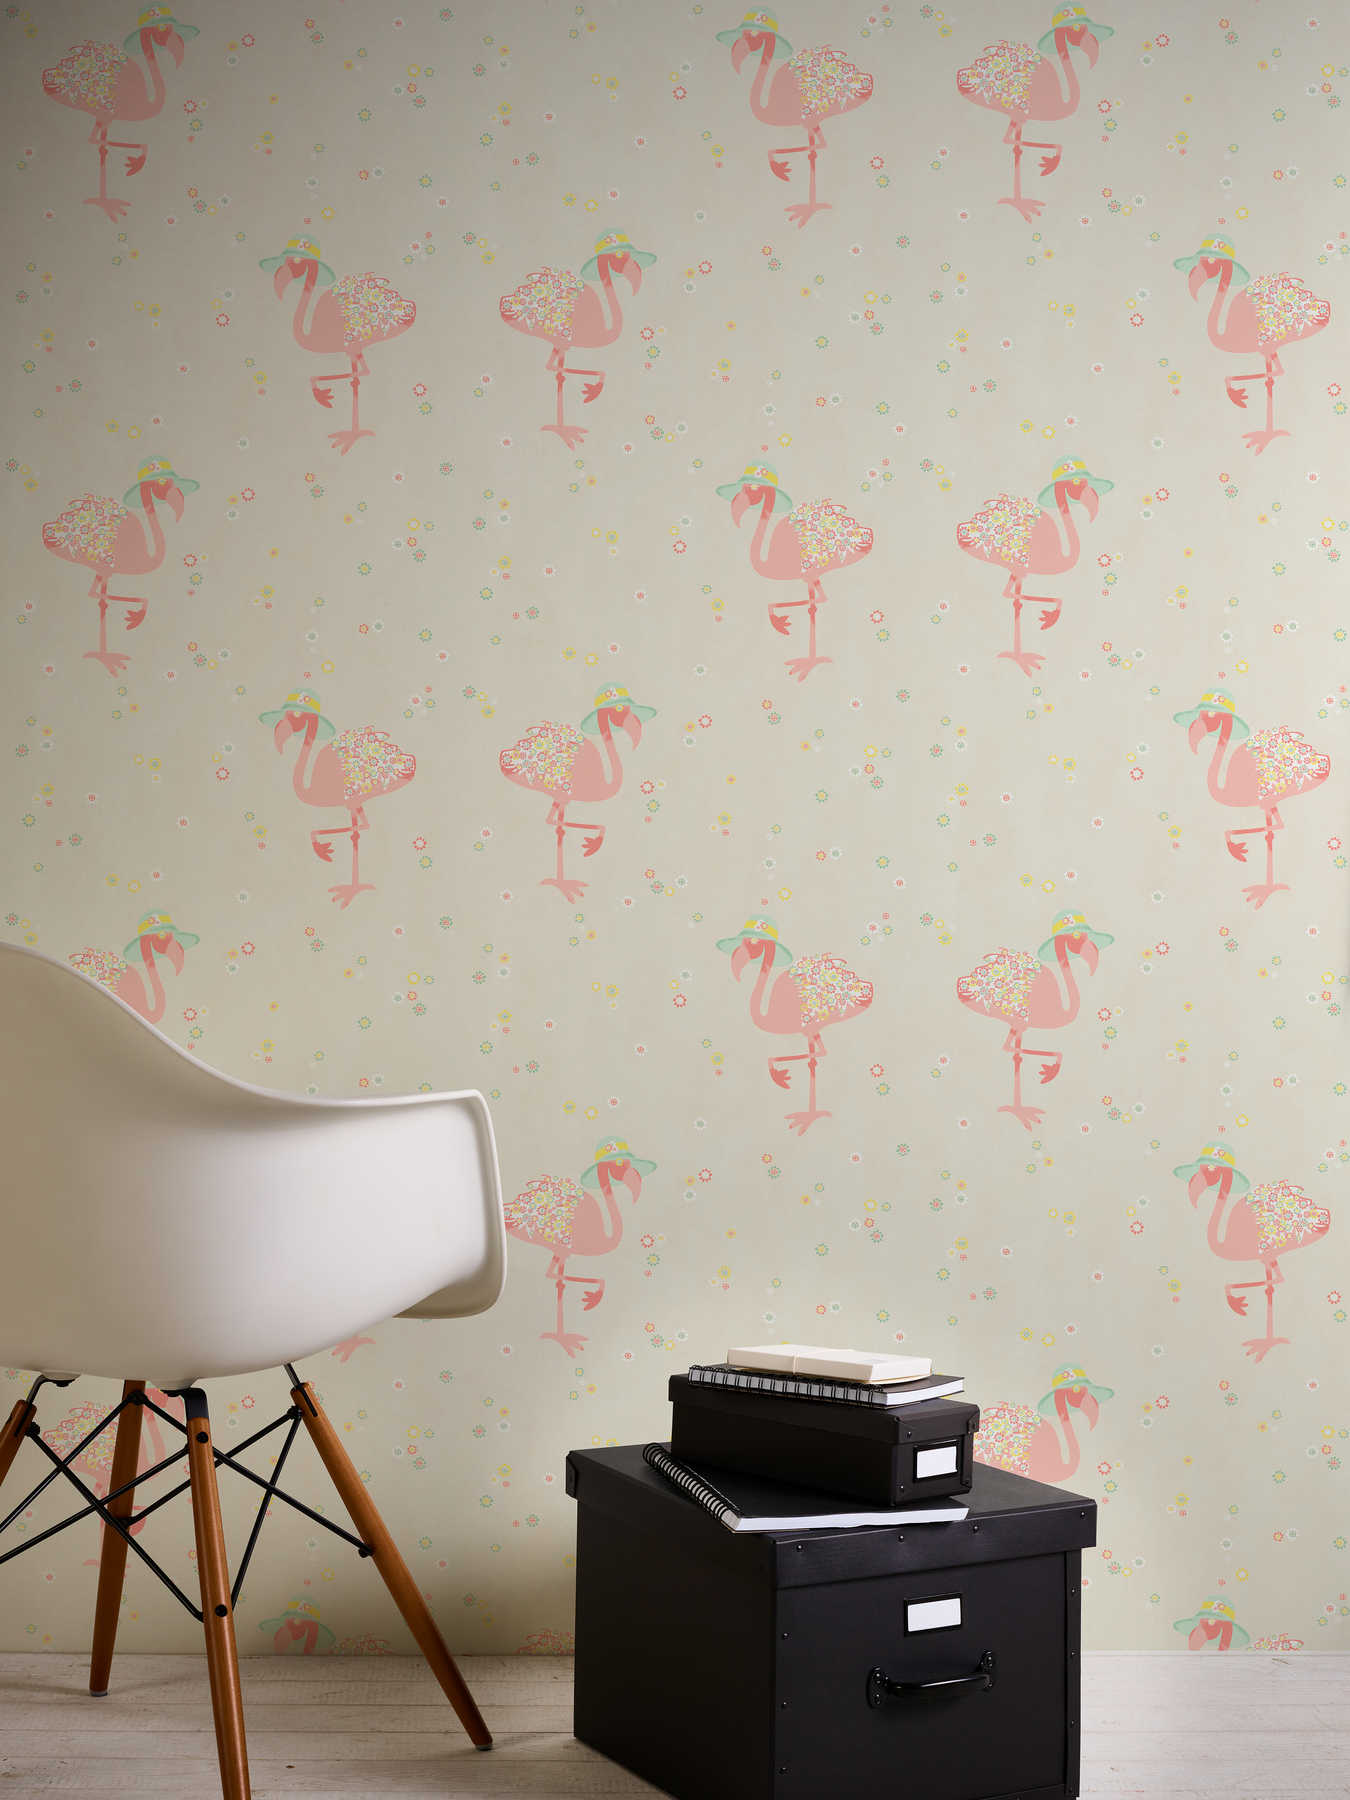             Non-woven wallpaper flamingo & flowers pattern - beige, pink
        